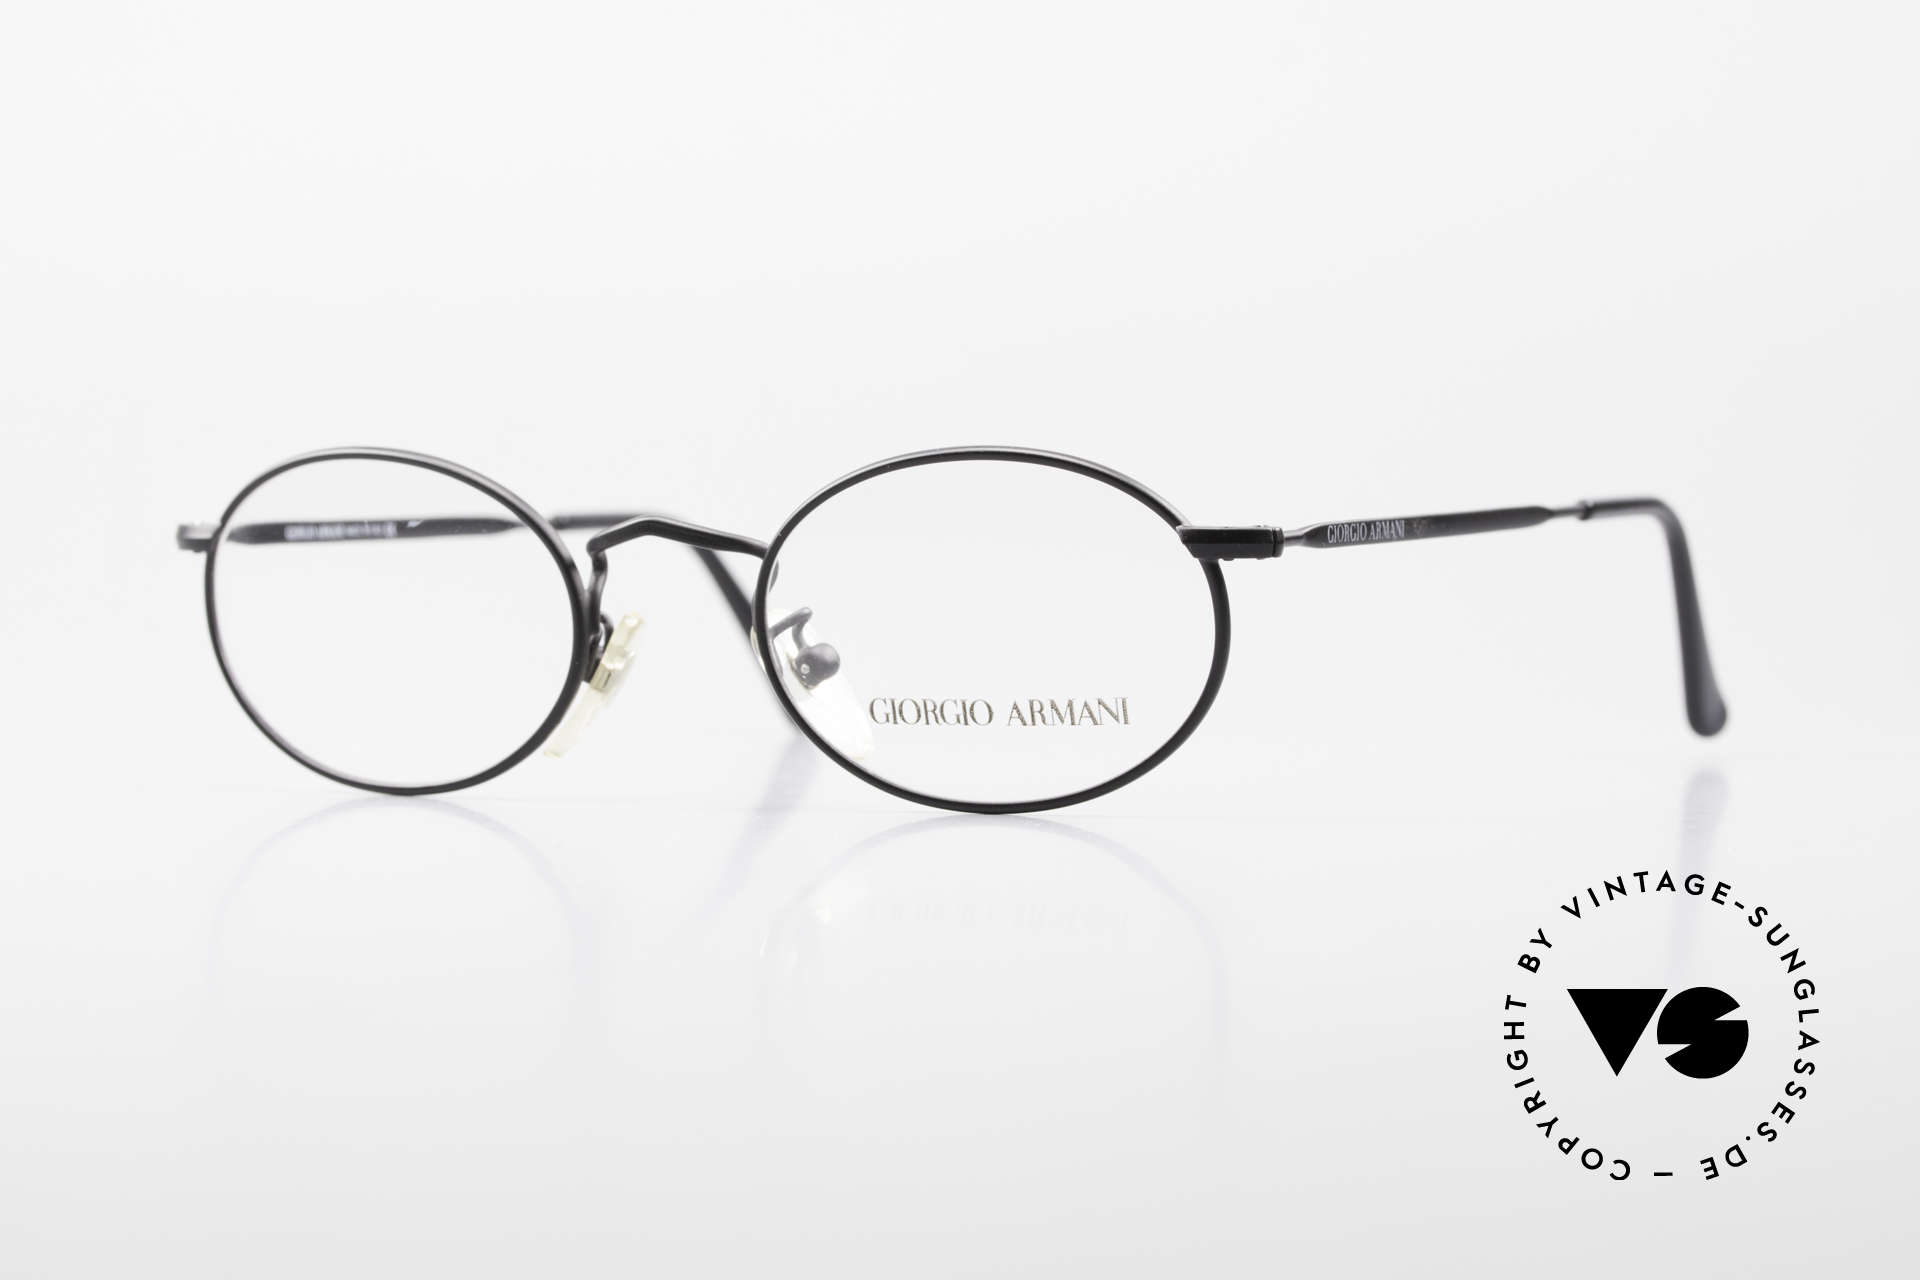 Glasses Giorgio Armani 131 Vintage Eyeglasses Oval Frame